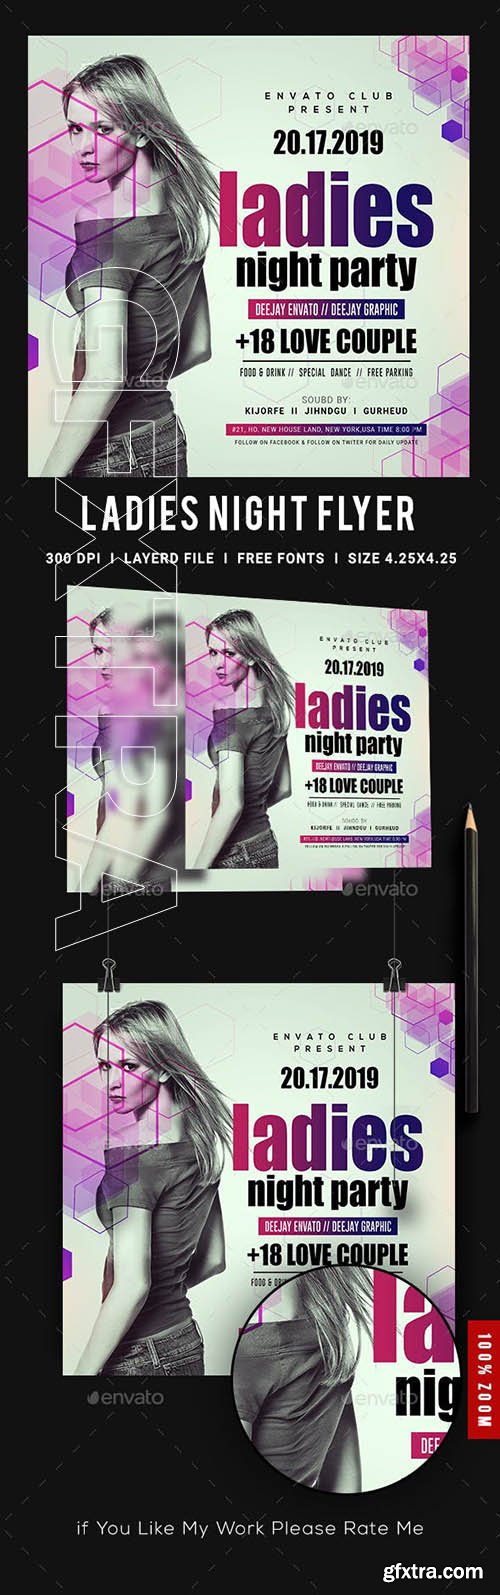 GraphicRiver - Ladies Night Club Flyer 23139277